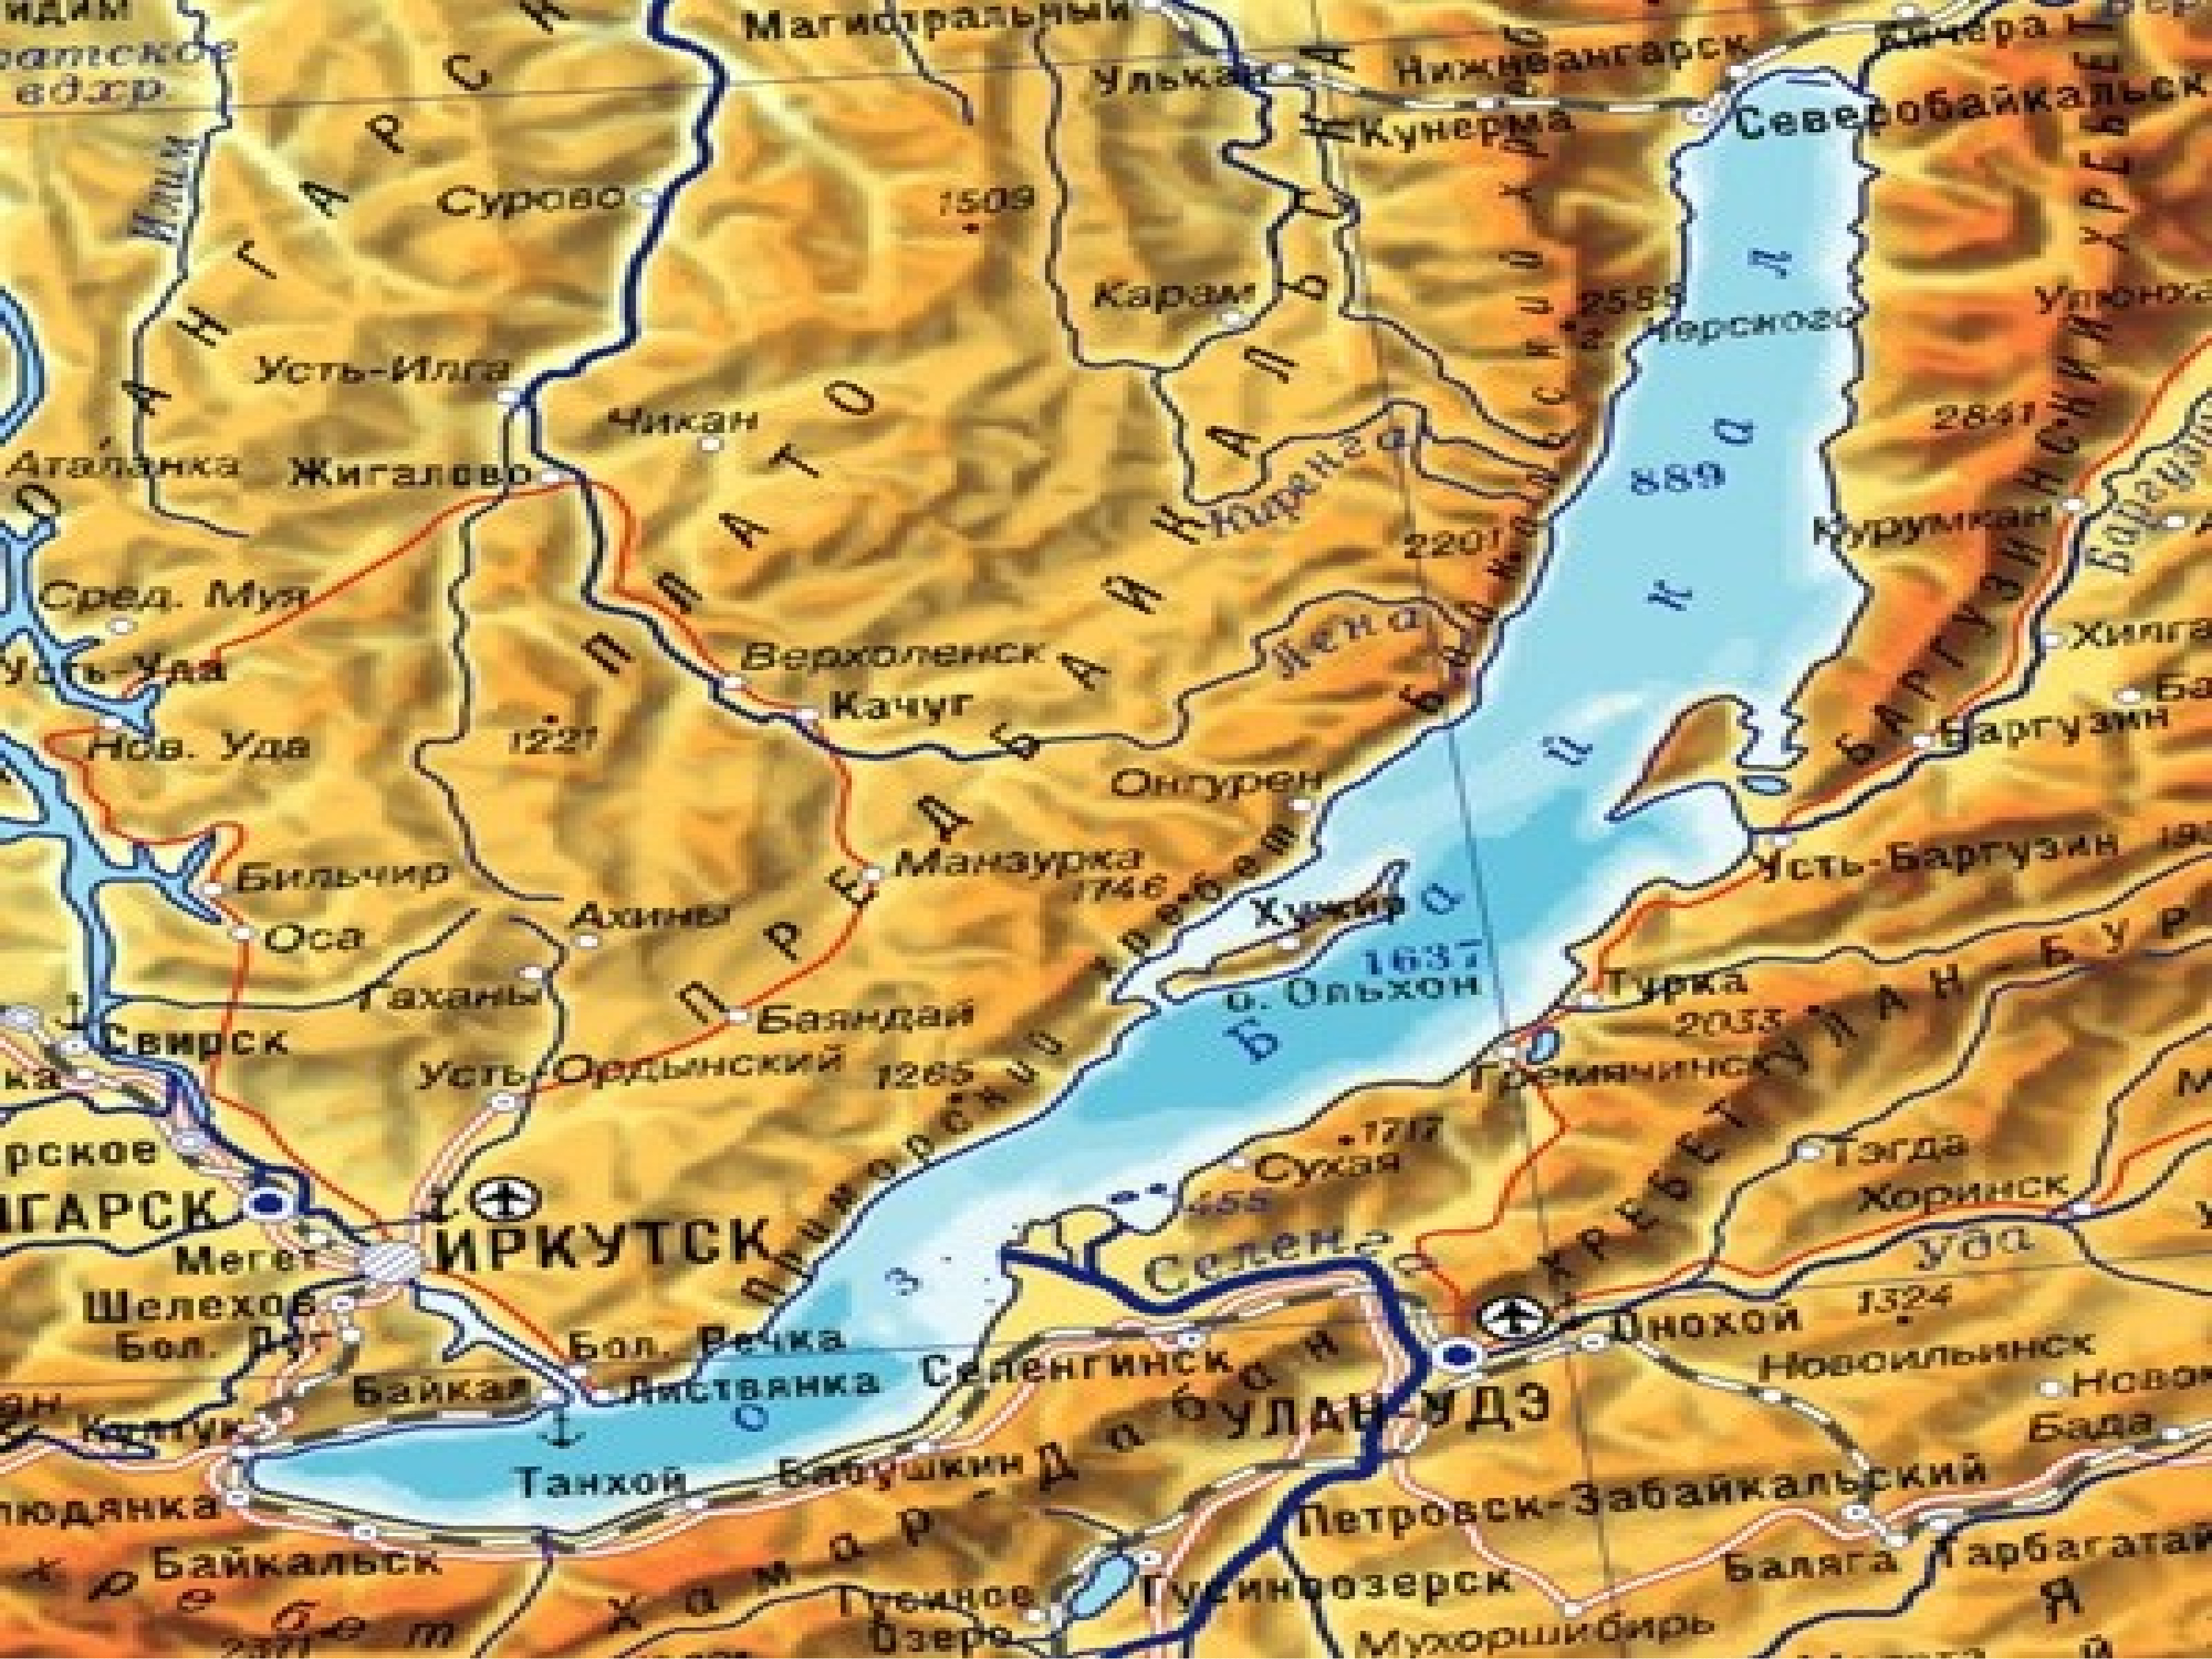 Lake maps. Озеро Байкал на карте. Озеро Байкал карта географическая. Географическое положение озера Байкал. Карта озеро Байкал на карте.